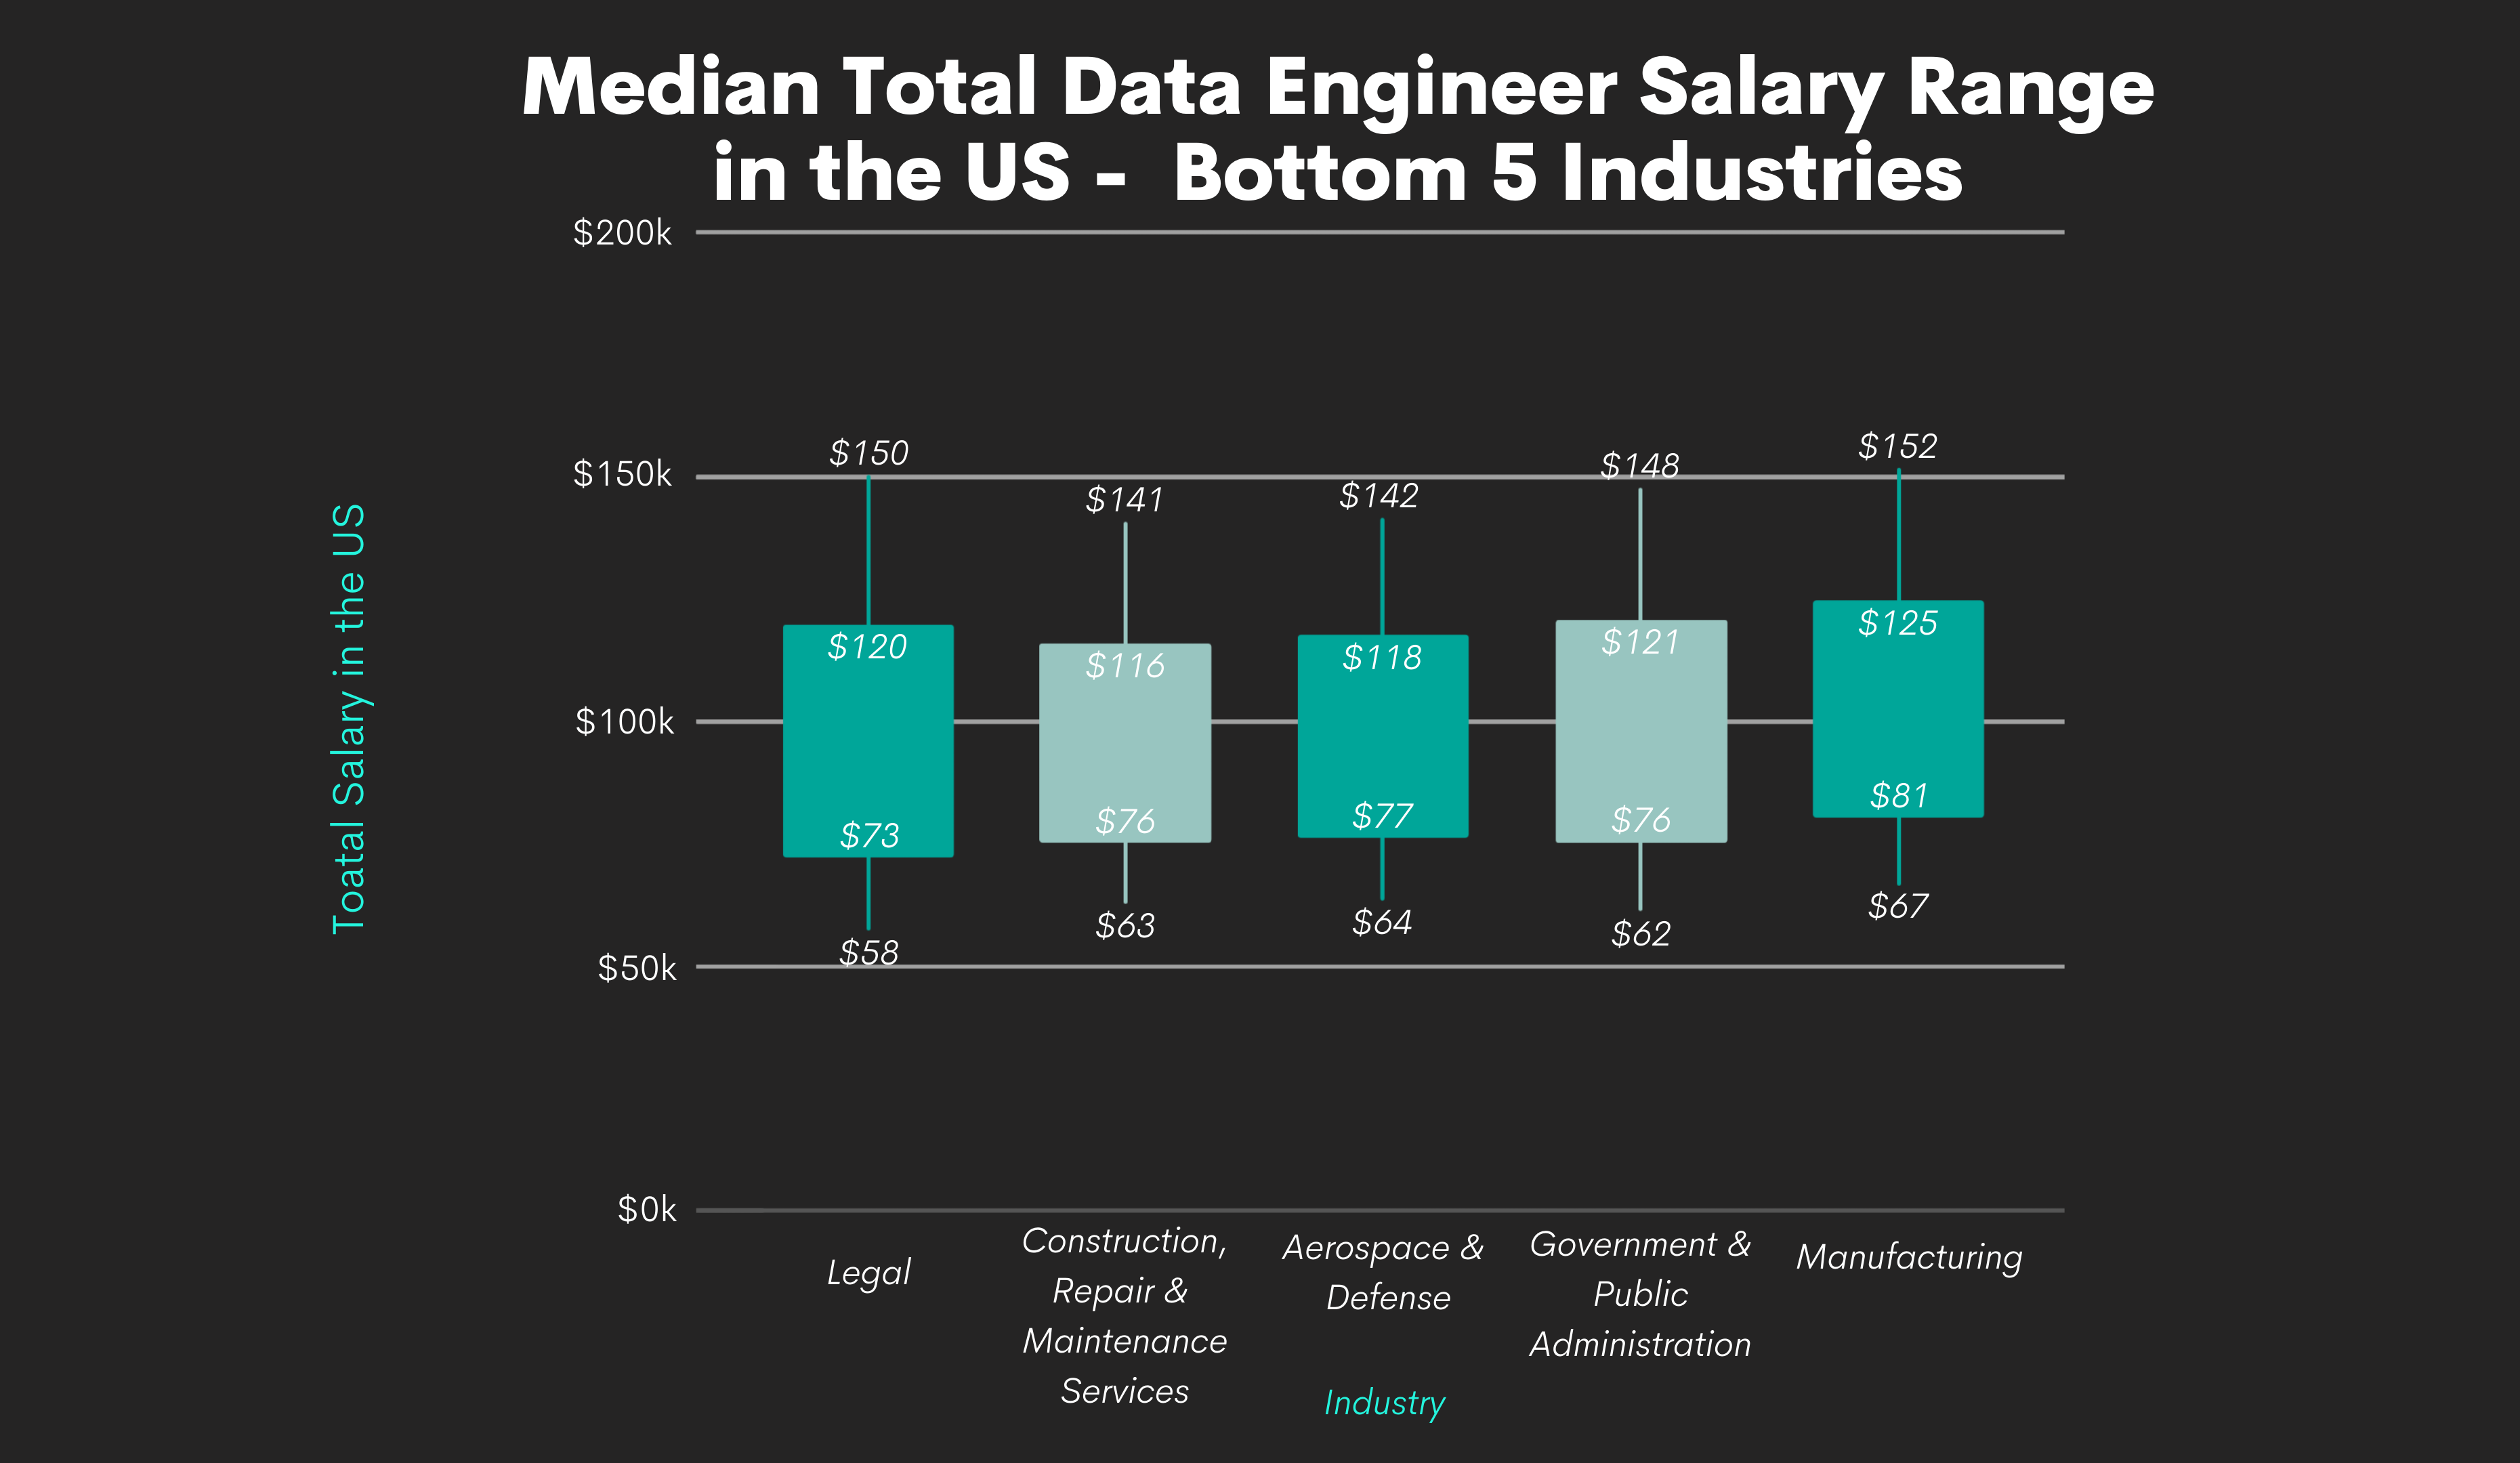 Total Data Engineer Salary Range by Bottom 5 Industries